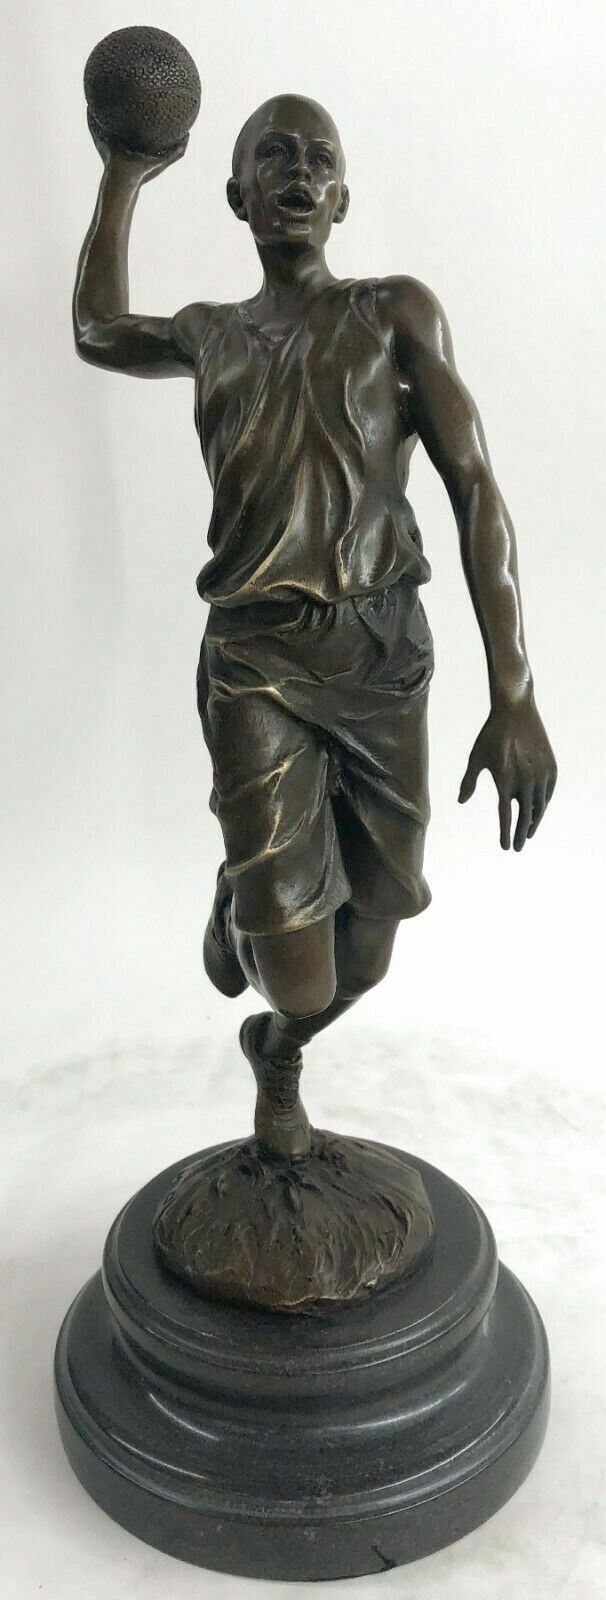 Handcrafted Detailed 2010 Michael Jordan Bronze Masterpiece Sculpture Artwork